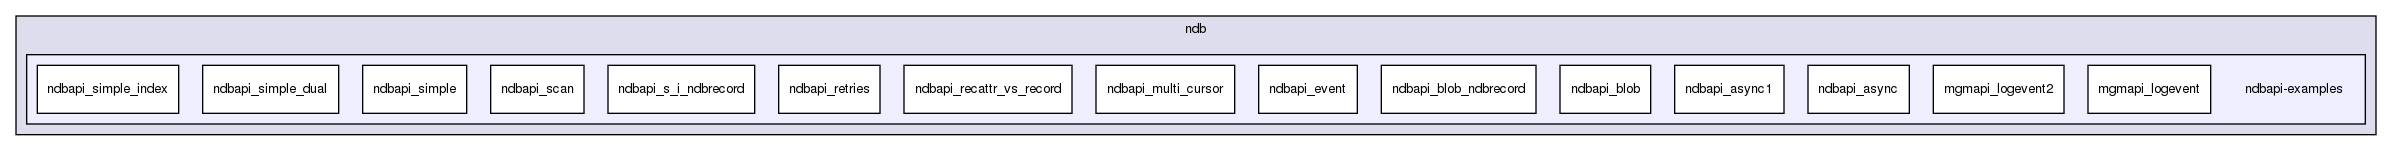 storage/ndb/ndbapi-examples/